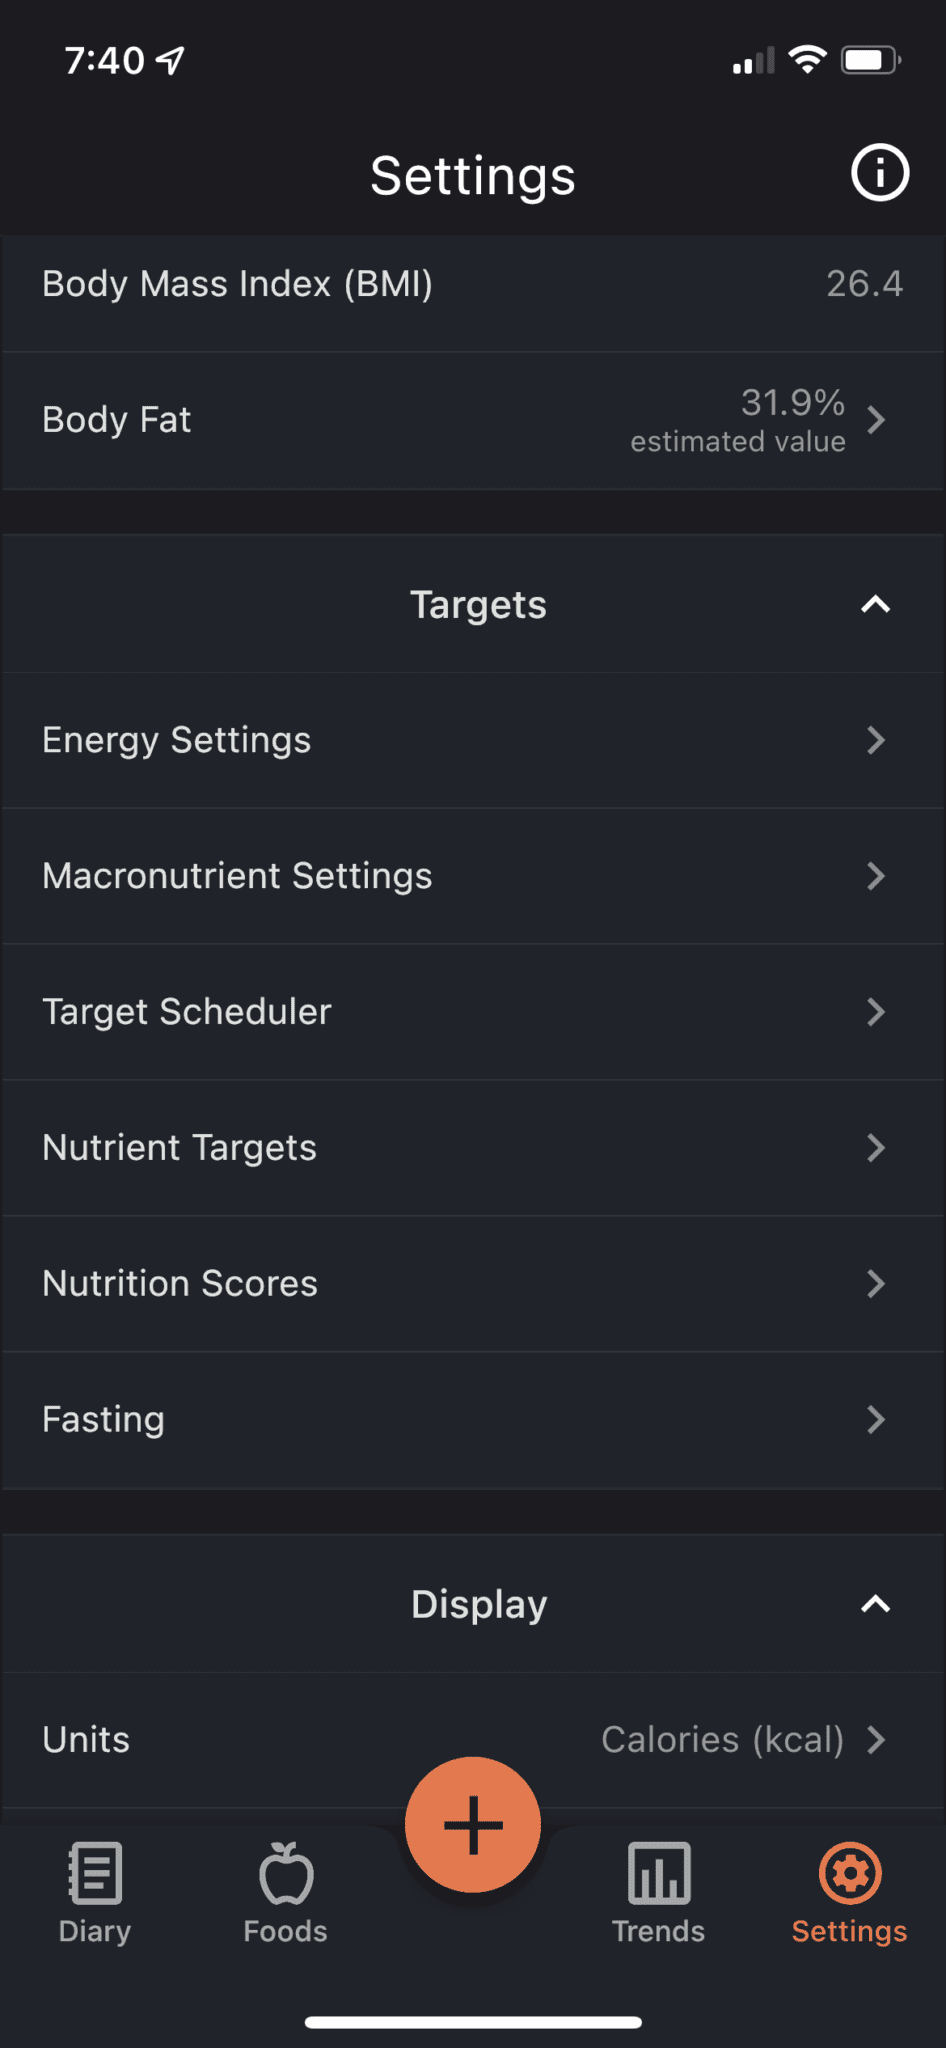 In settings, click on macronutrient settings or nutrient targets.